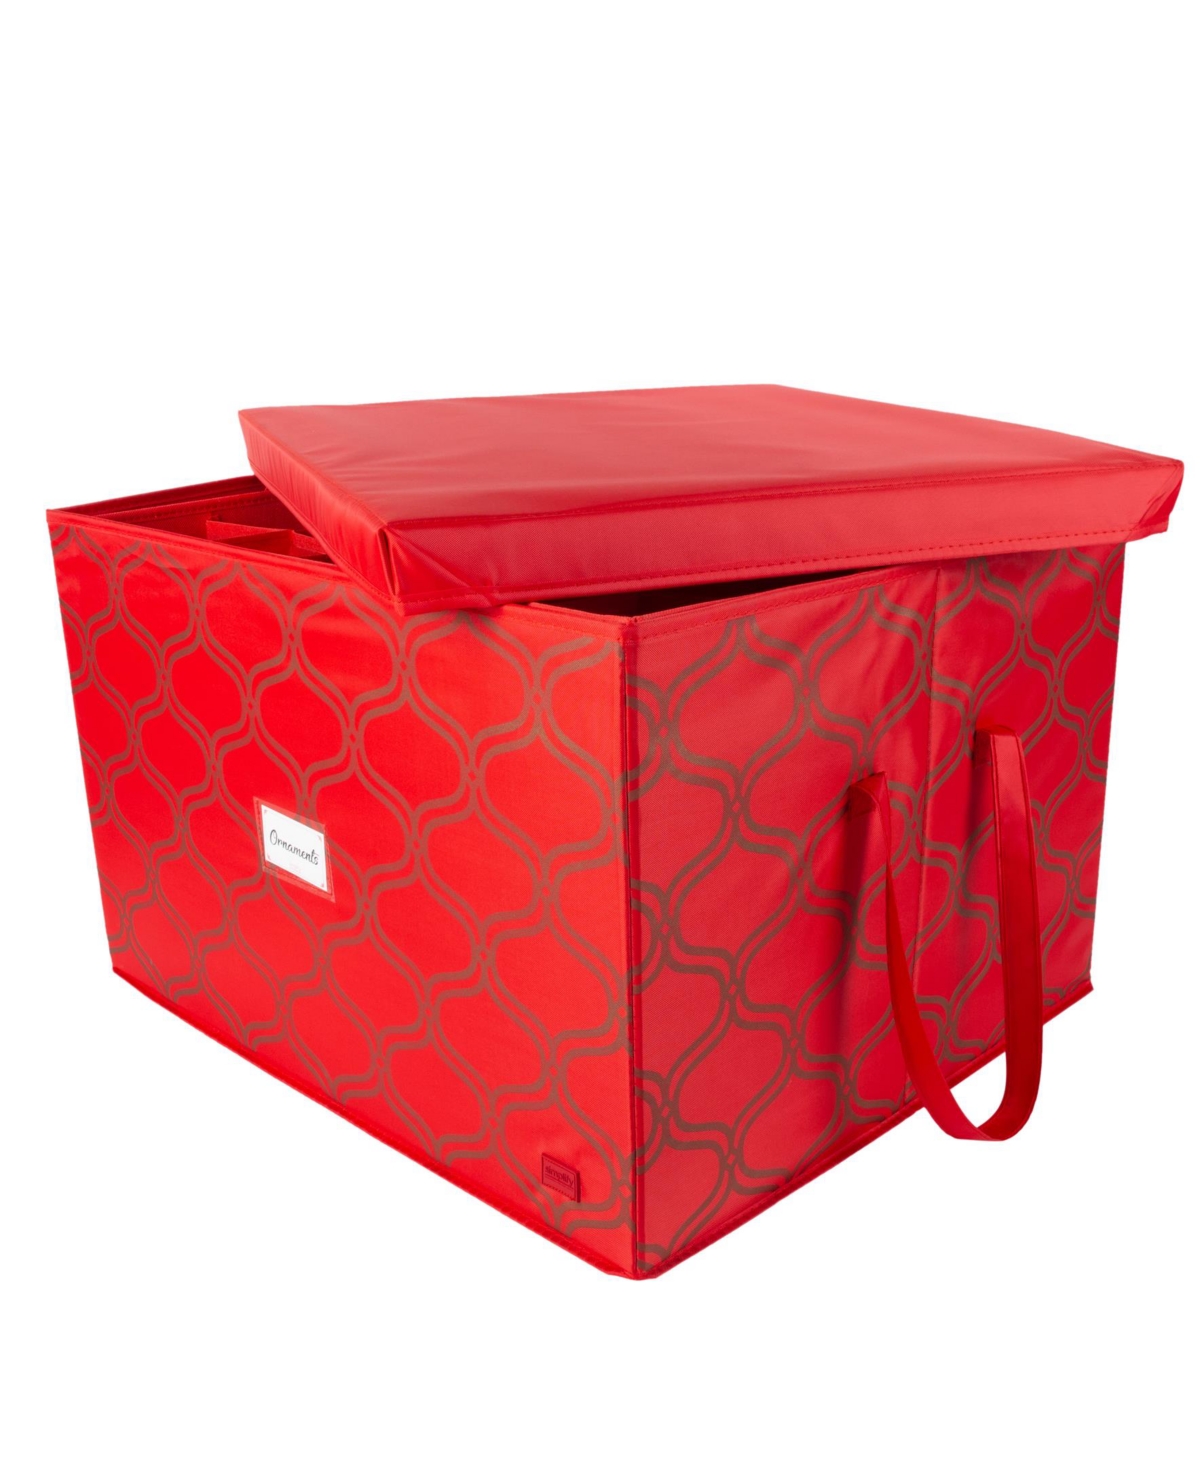 60 Ornament Storage Box - Red